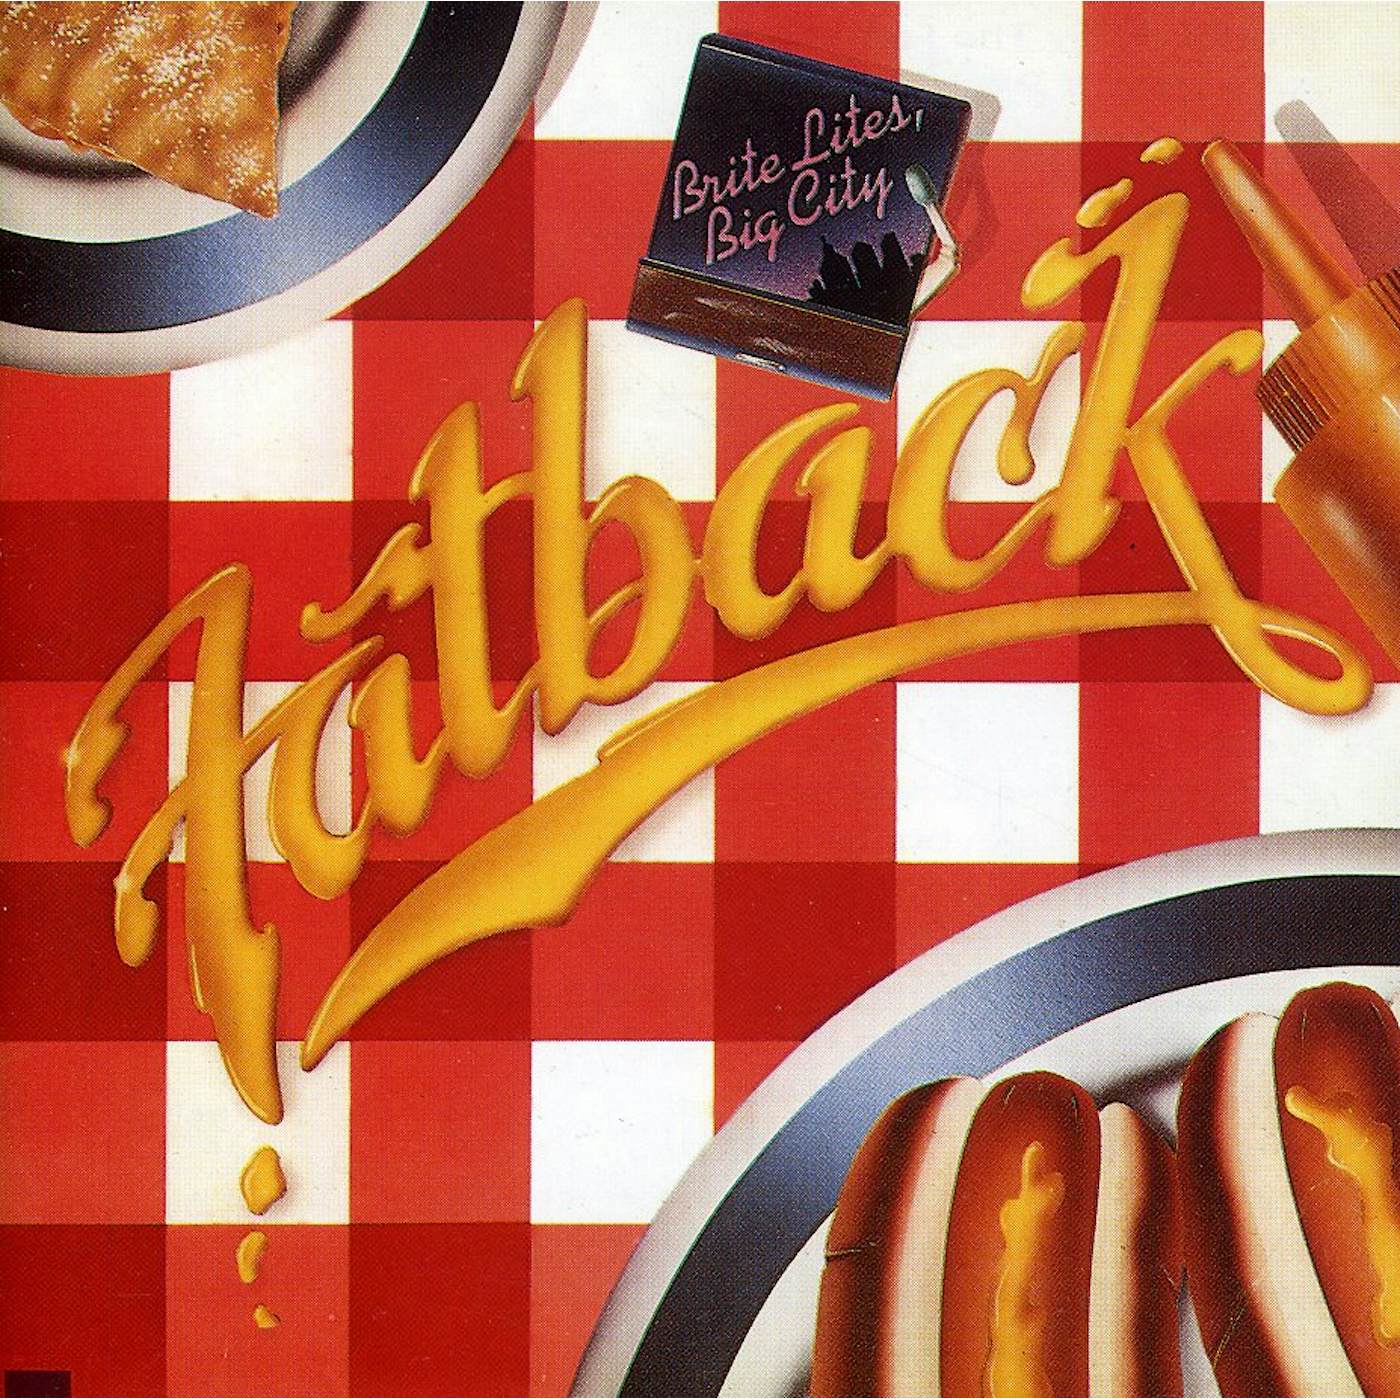 Fatback Band BRITE LITES / BIG CITY CD